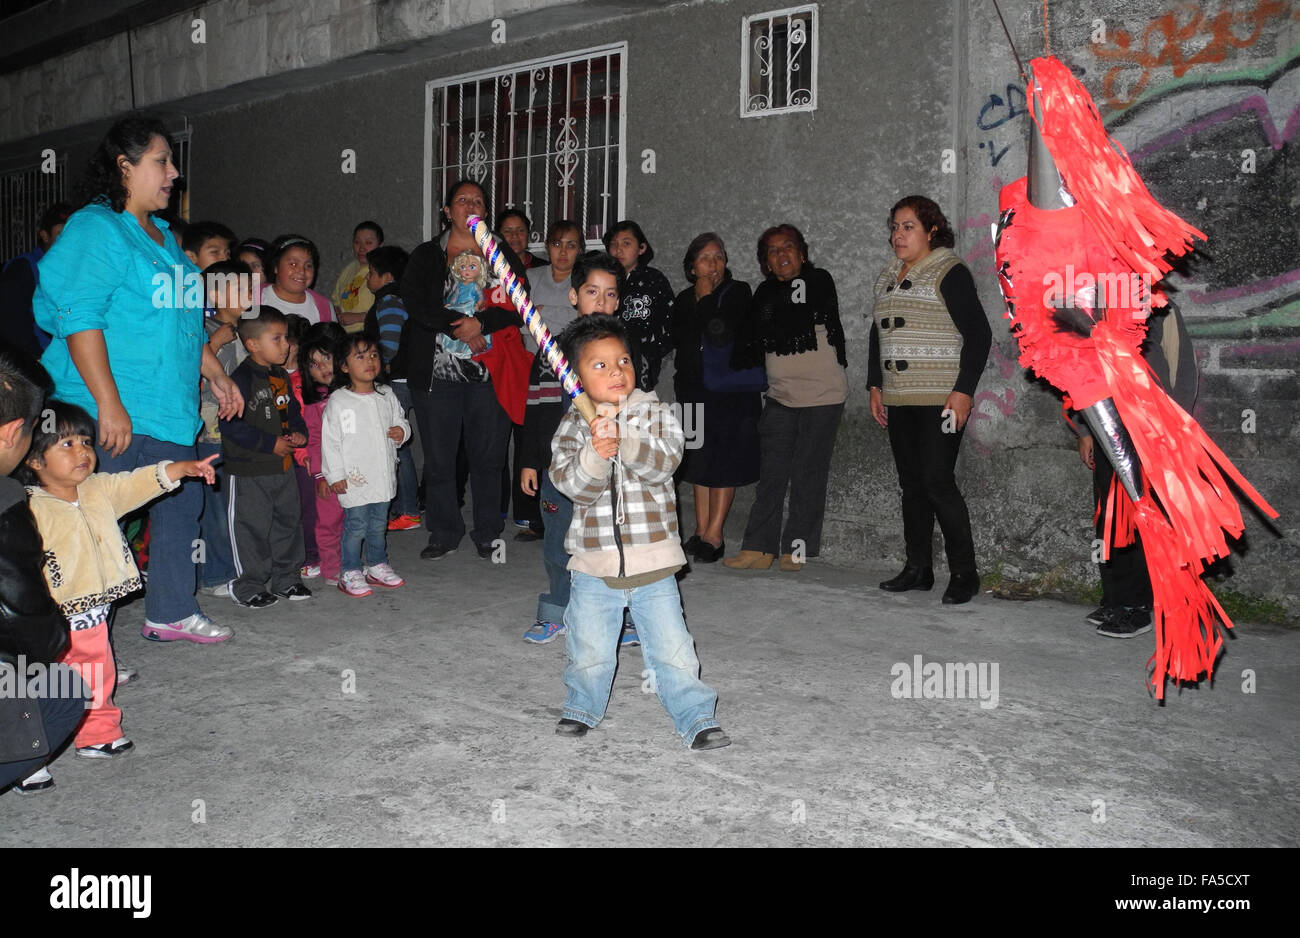 Mexico City, Mexico. 22nd Dec, 2014. Children hitting a pinata in